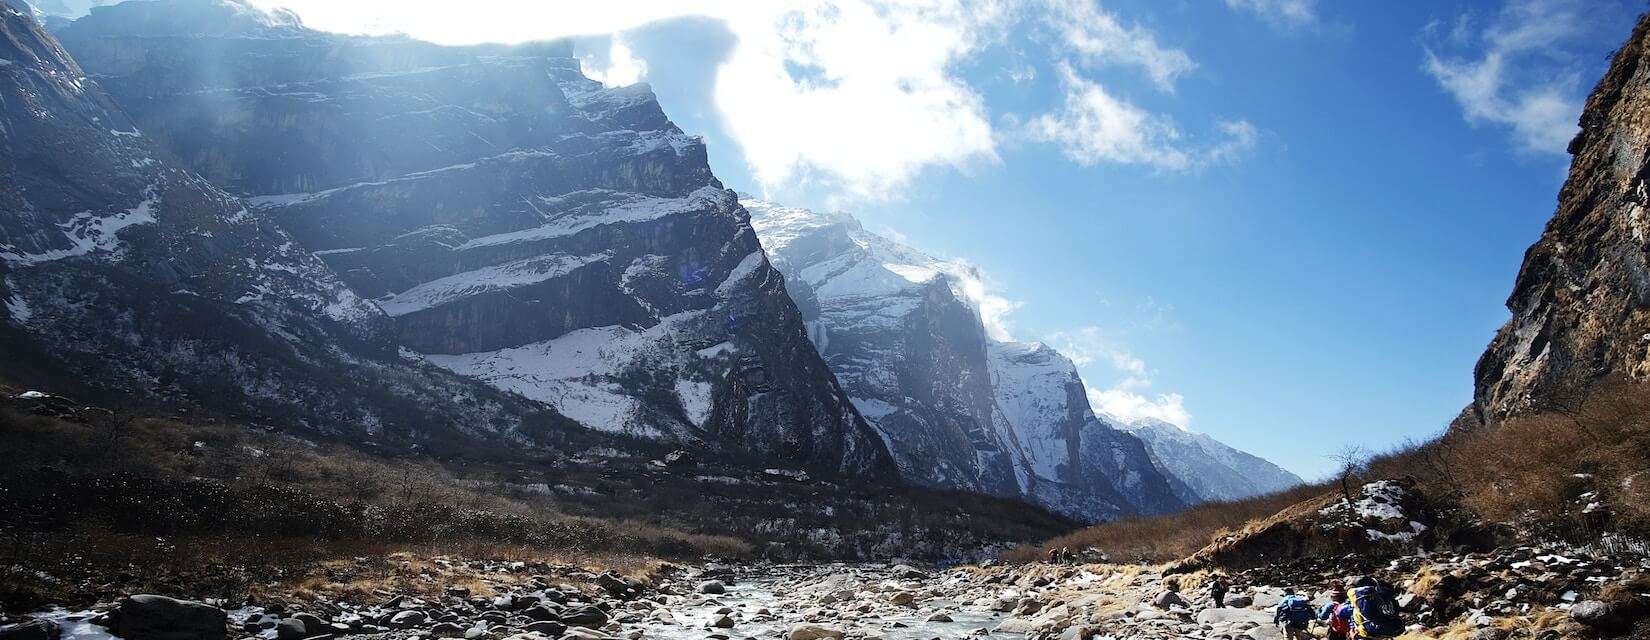 Annapurna Nepal Travel